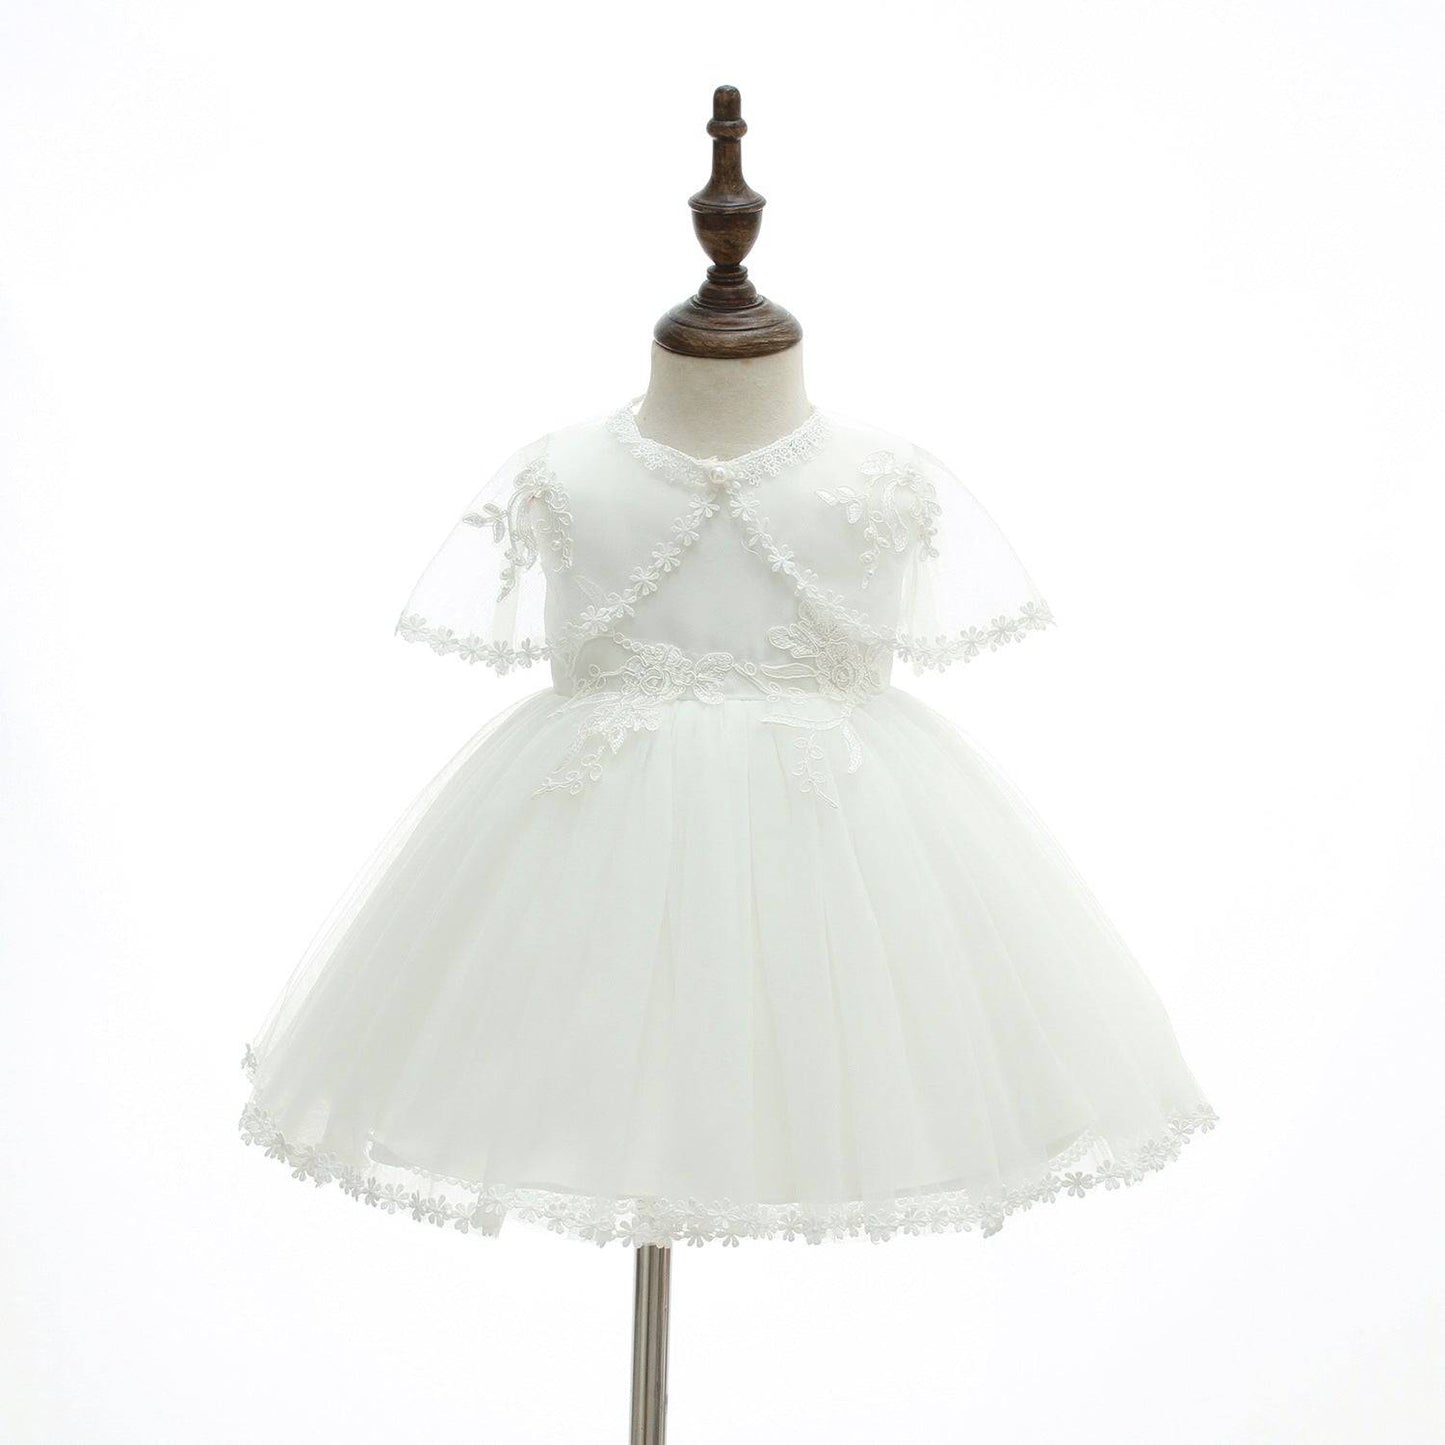 One Year Old Full Moon Wedding Dress - LITTLE BEDOUIN